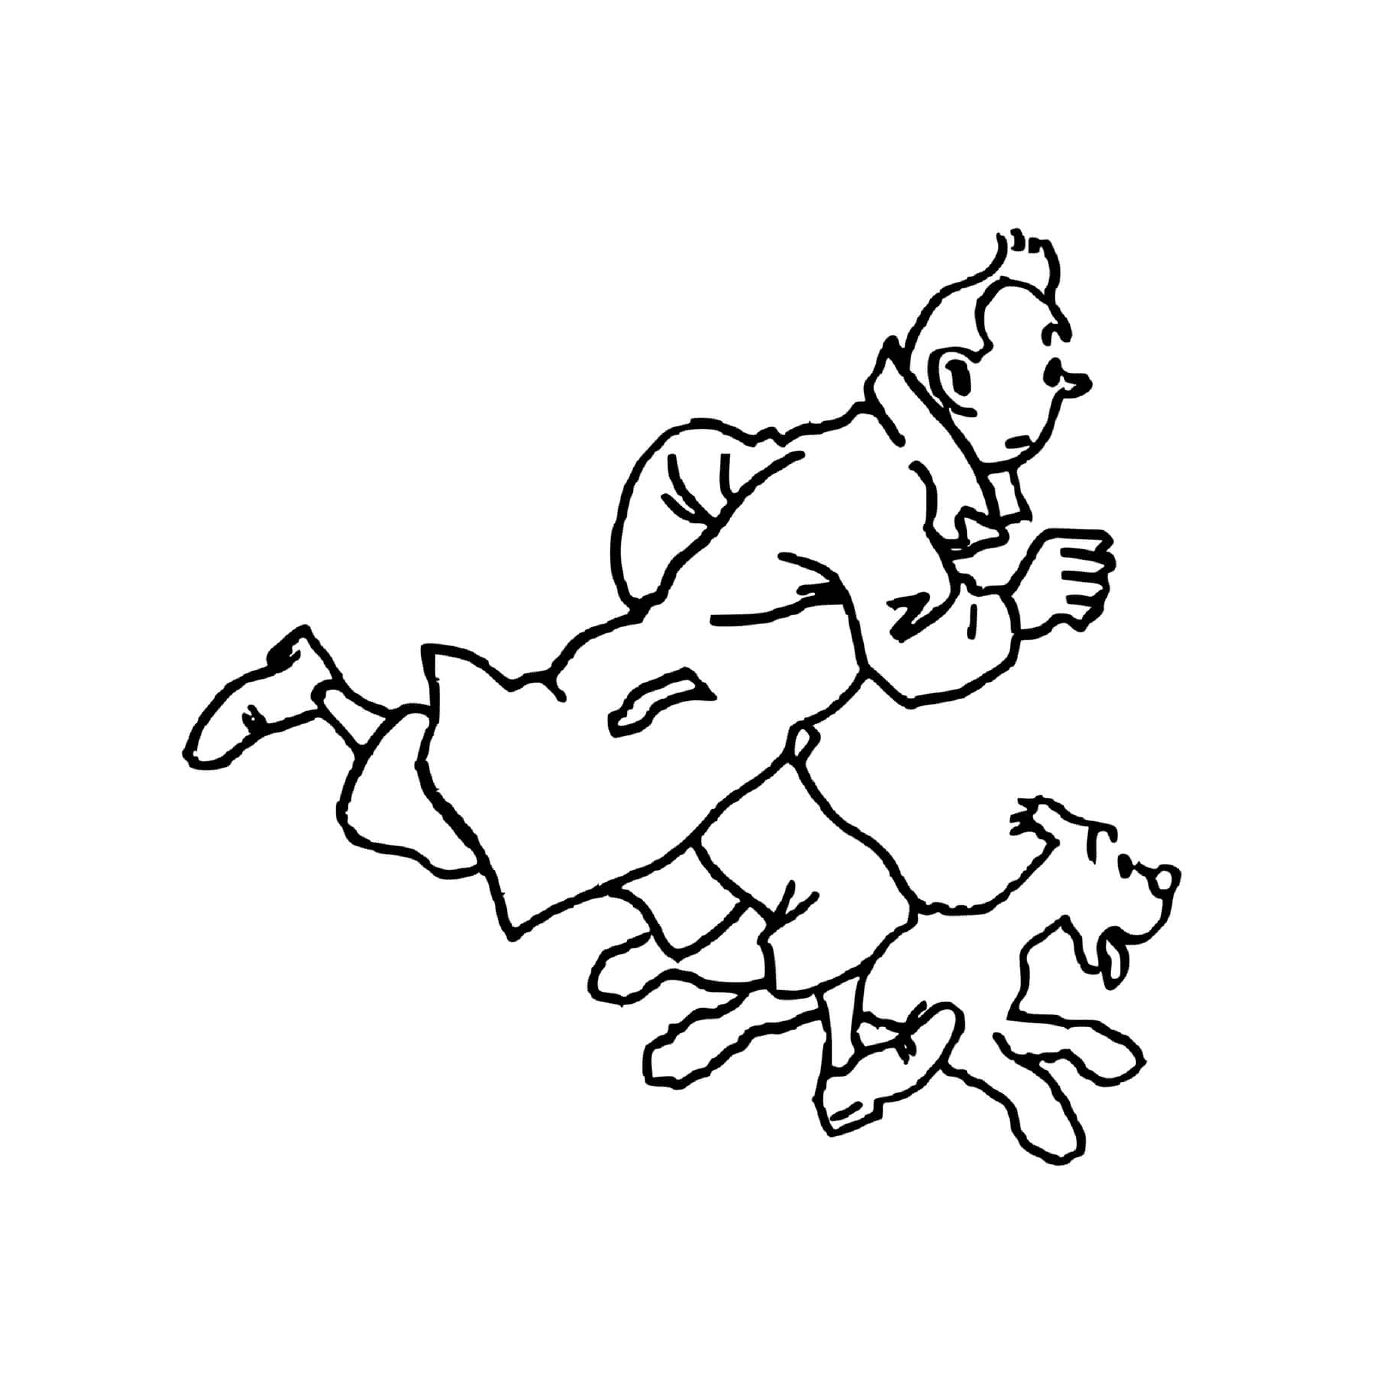  Tintin e Milou correm rápido 